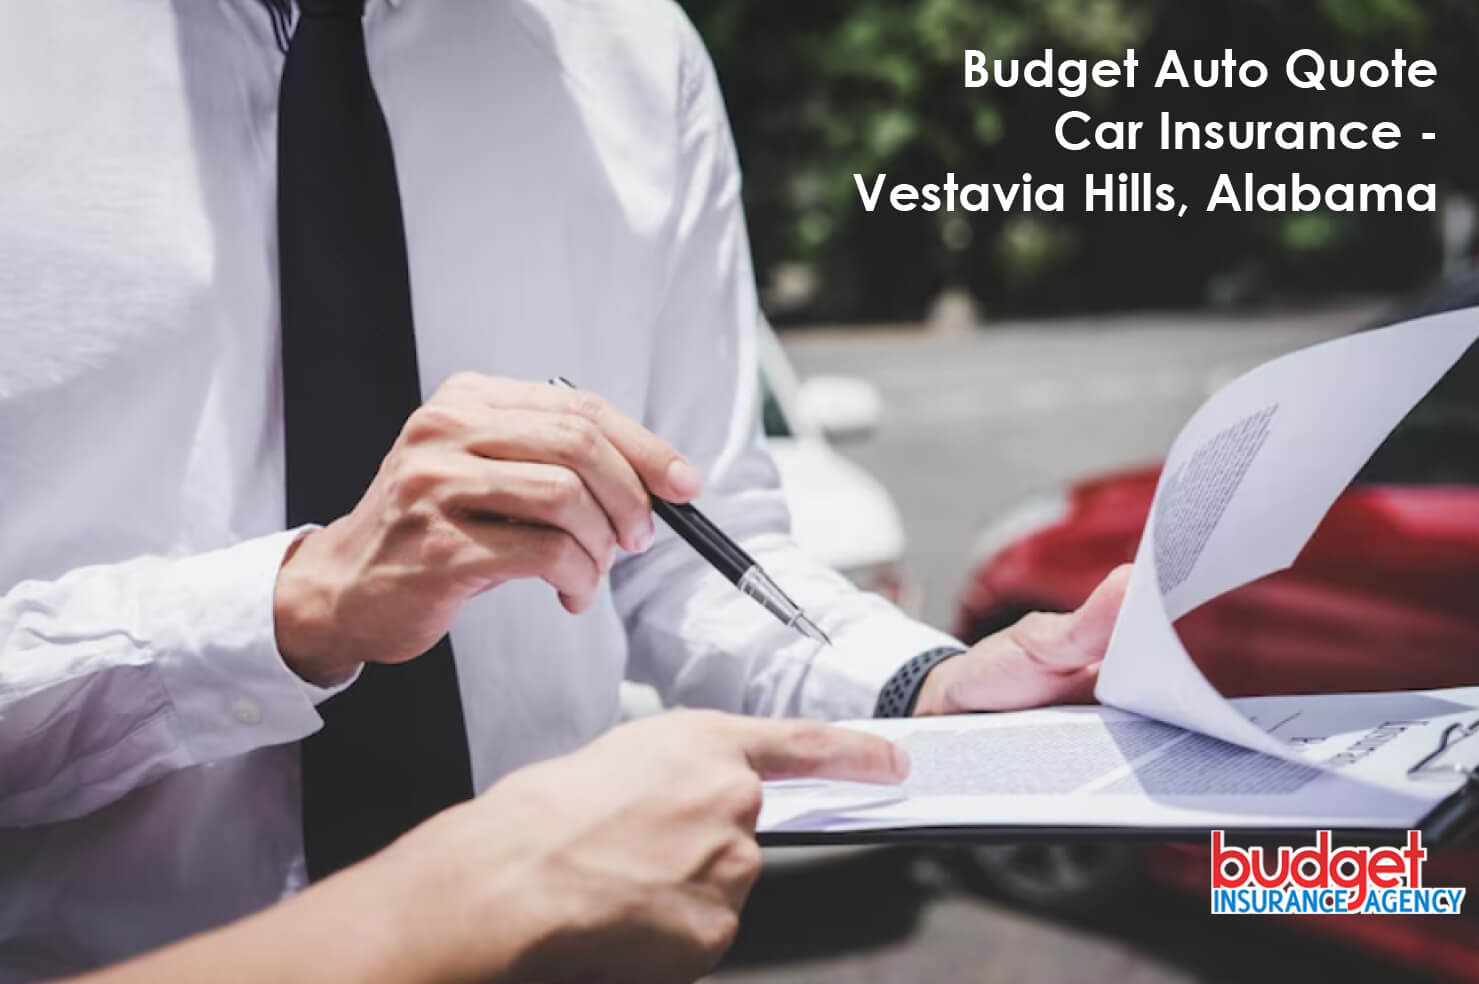 Budget Auto Quote Car Insurance - Vestavia Hills, Alabama